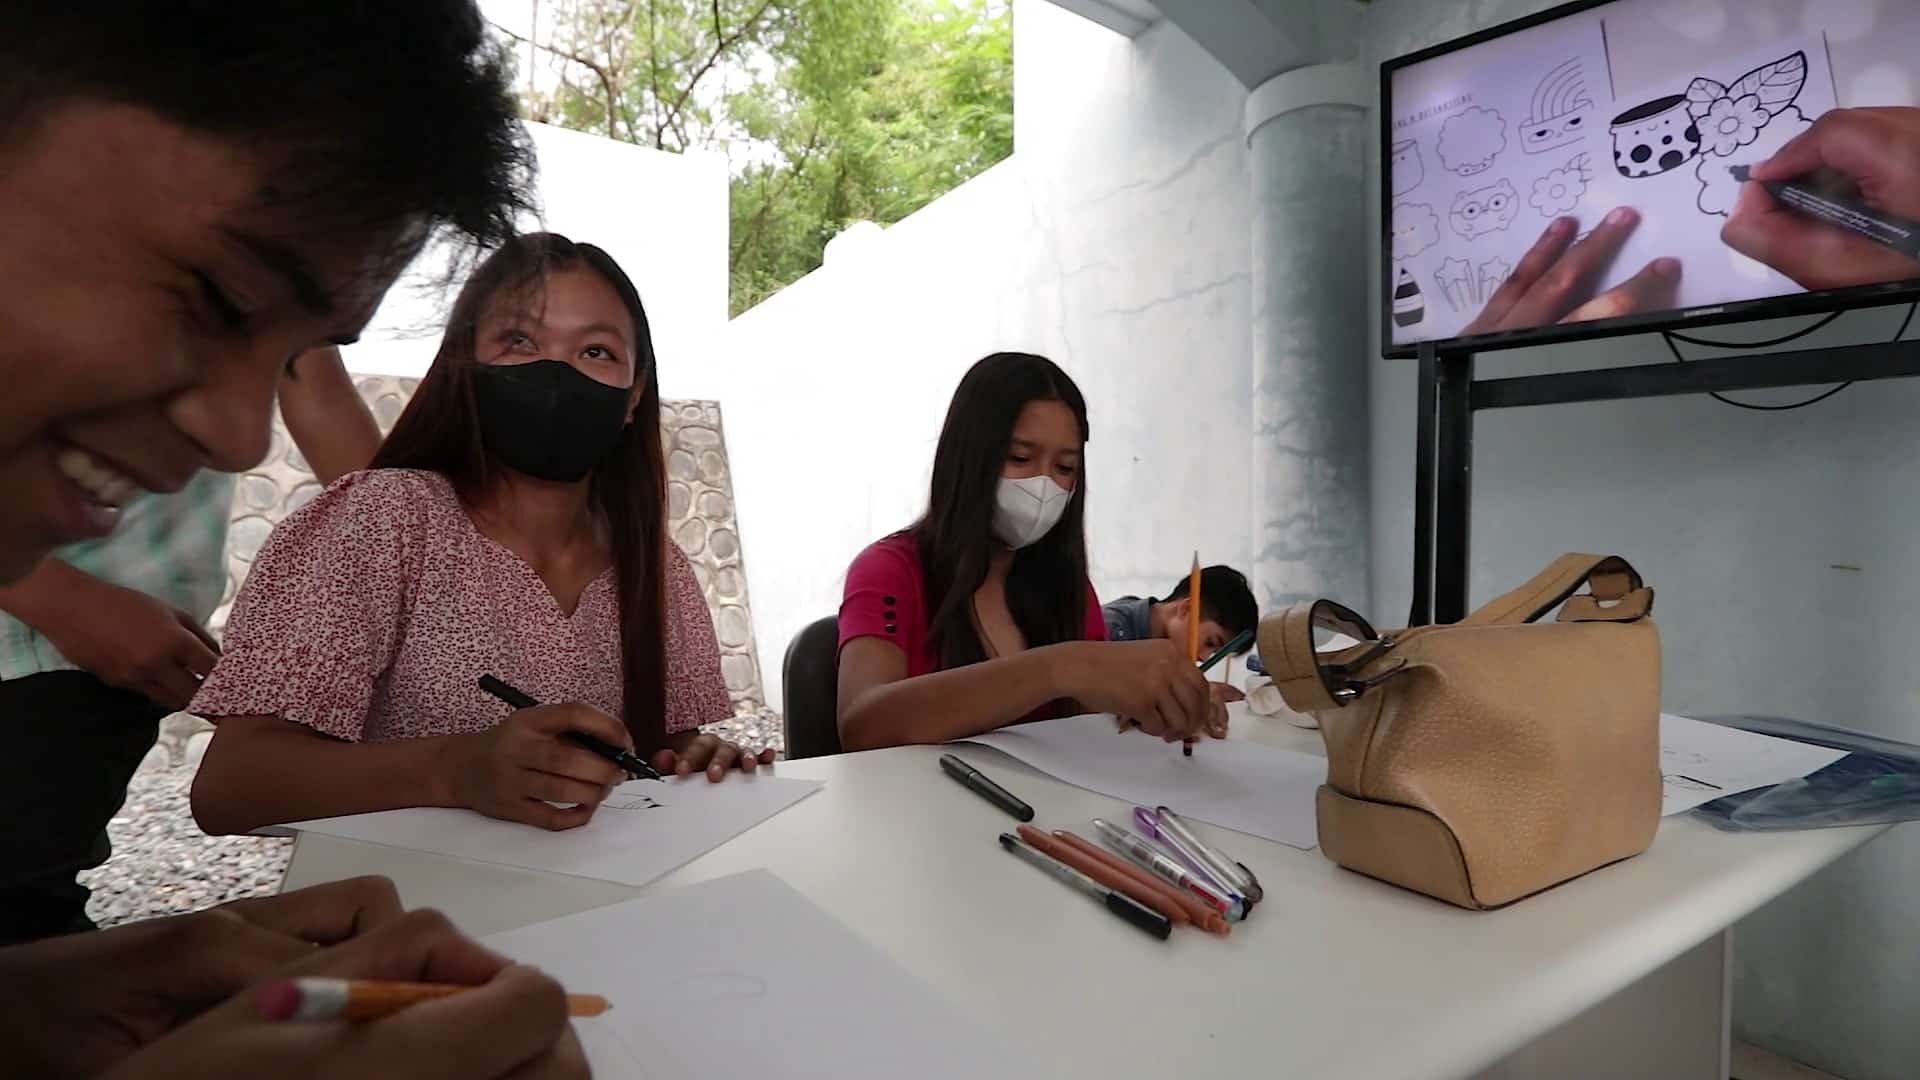 INCinema film, art activity impart values, skills to youth in Tarlac City